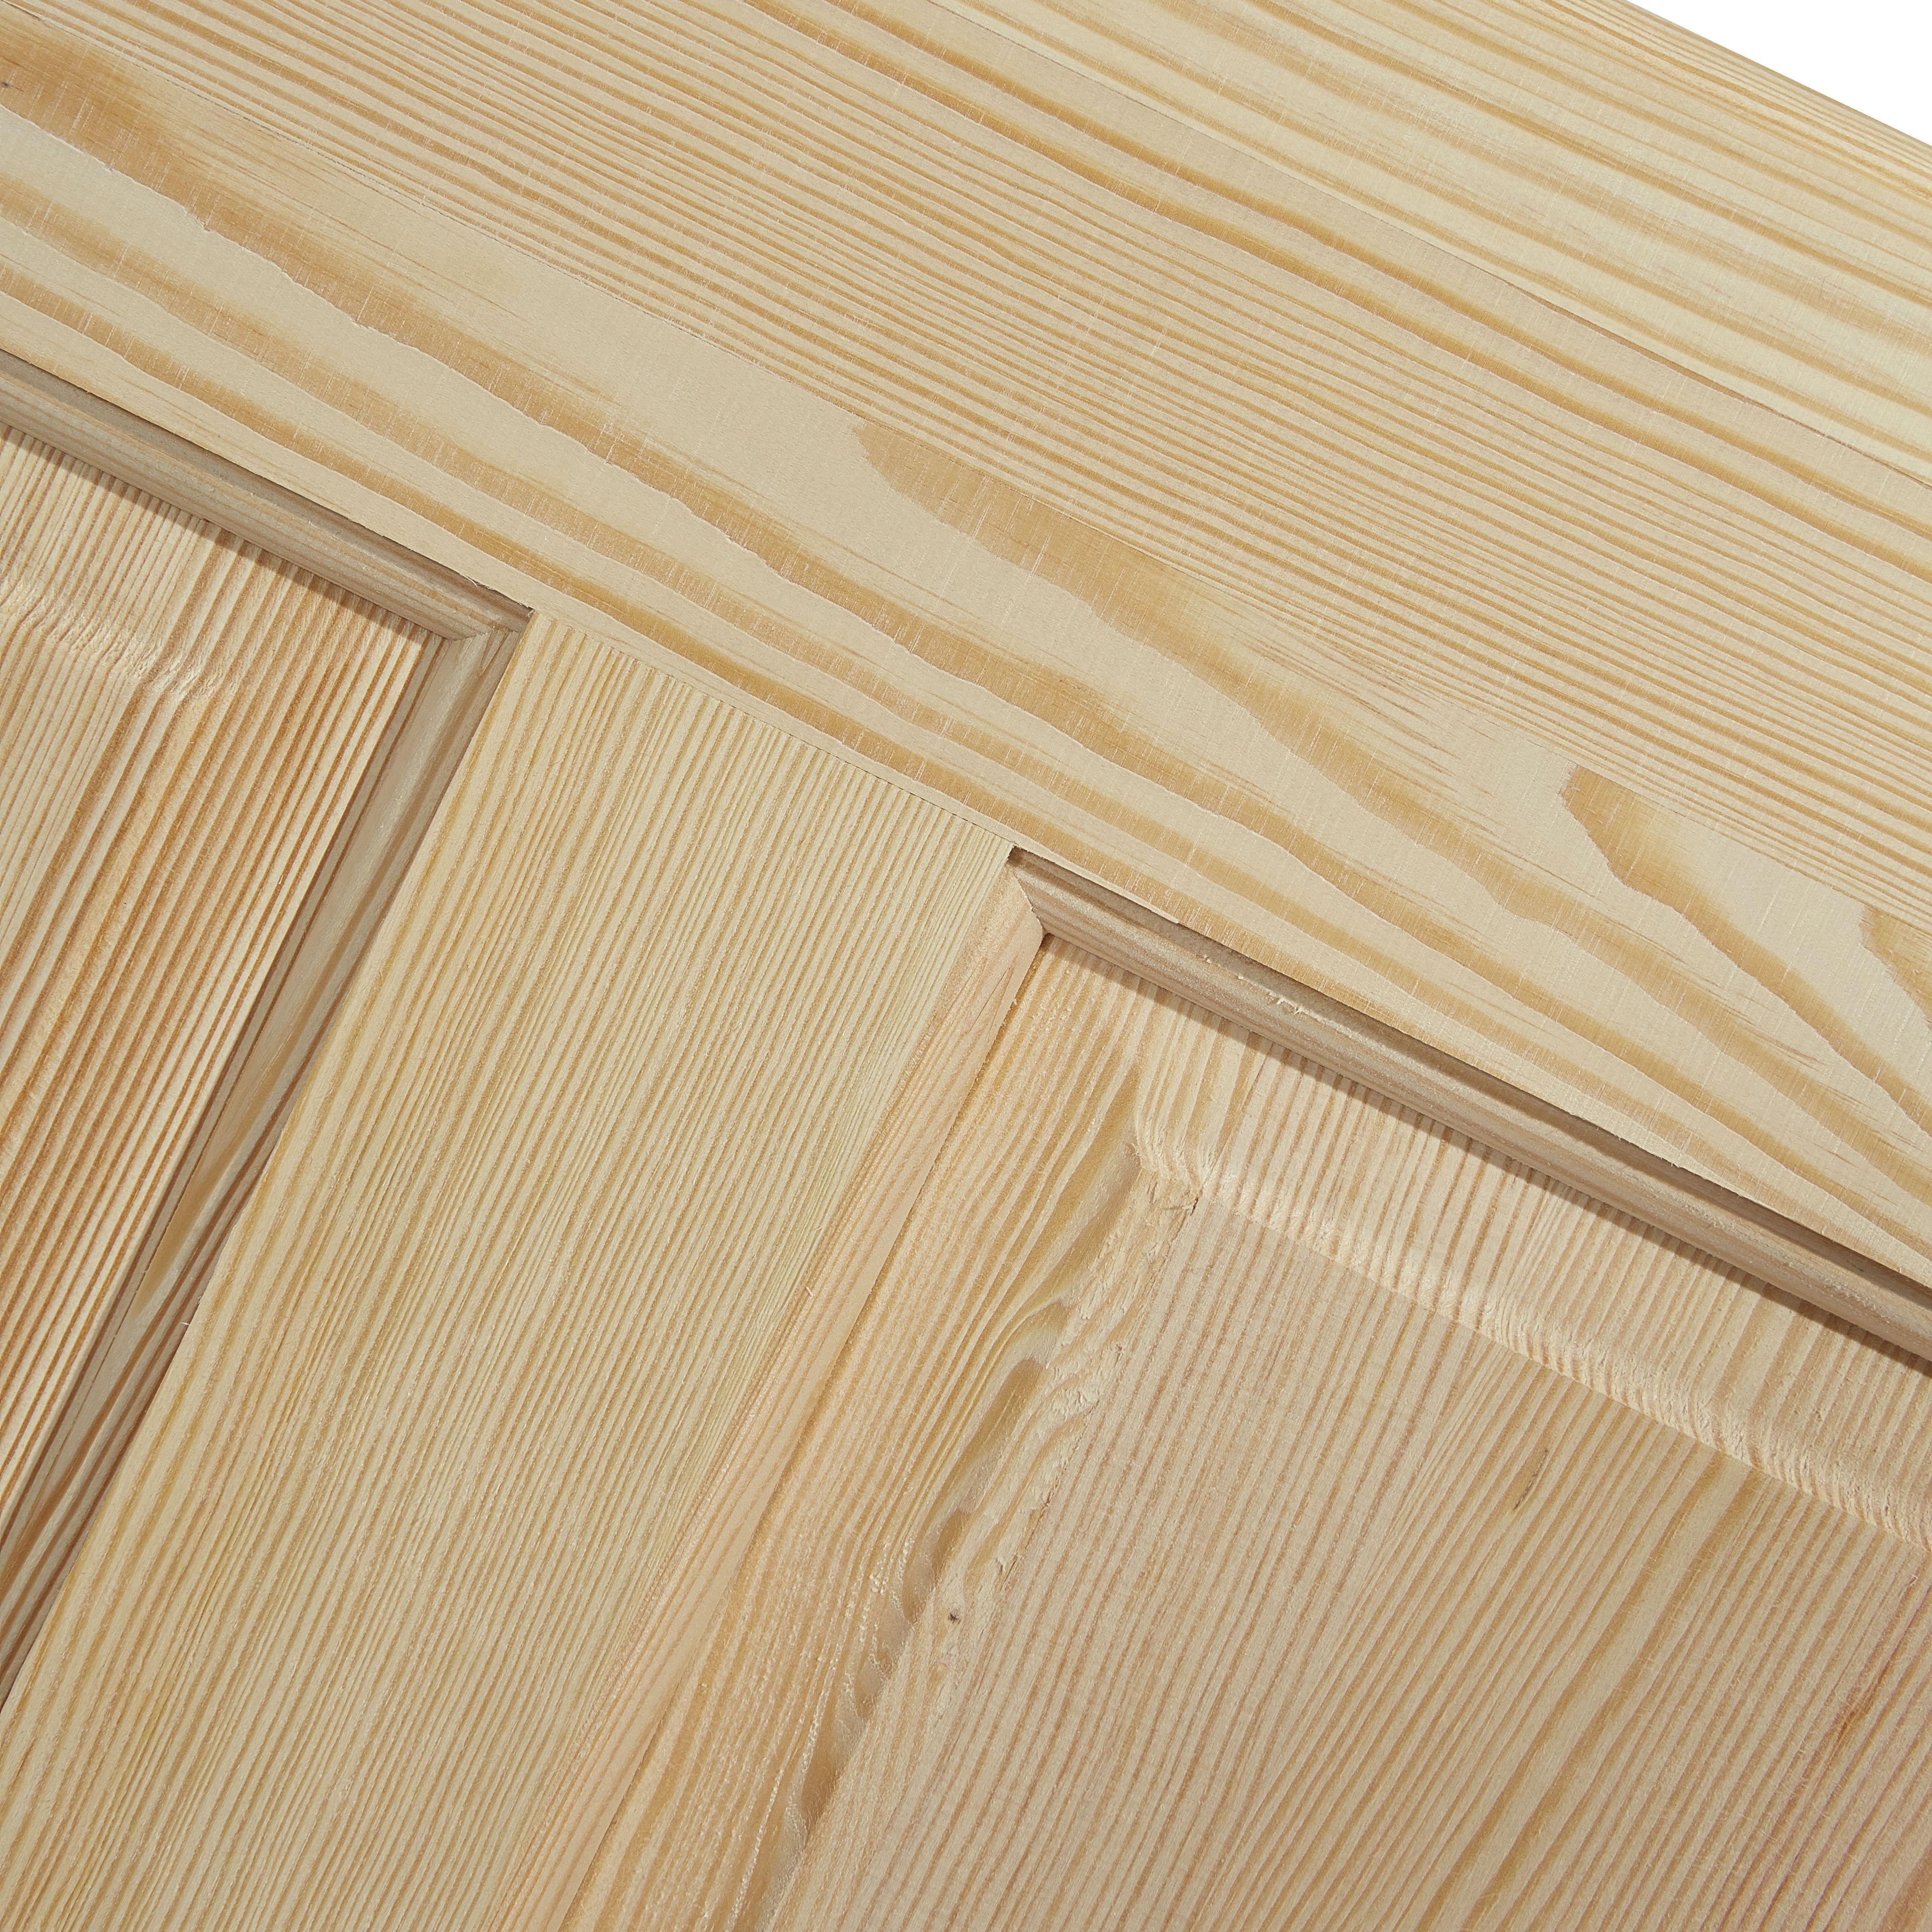 Geom 6 panel Clear Glazed Victorian Pine veneer Internal Clear pine Door, (H)1981mm (W)762mm (T)35mm